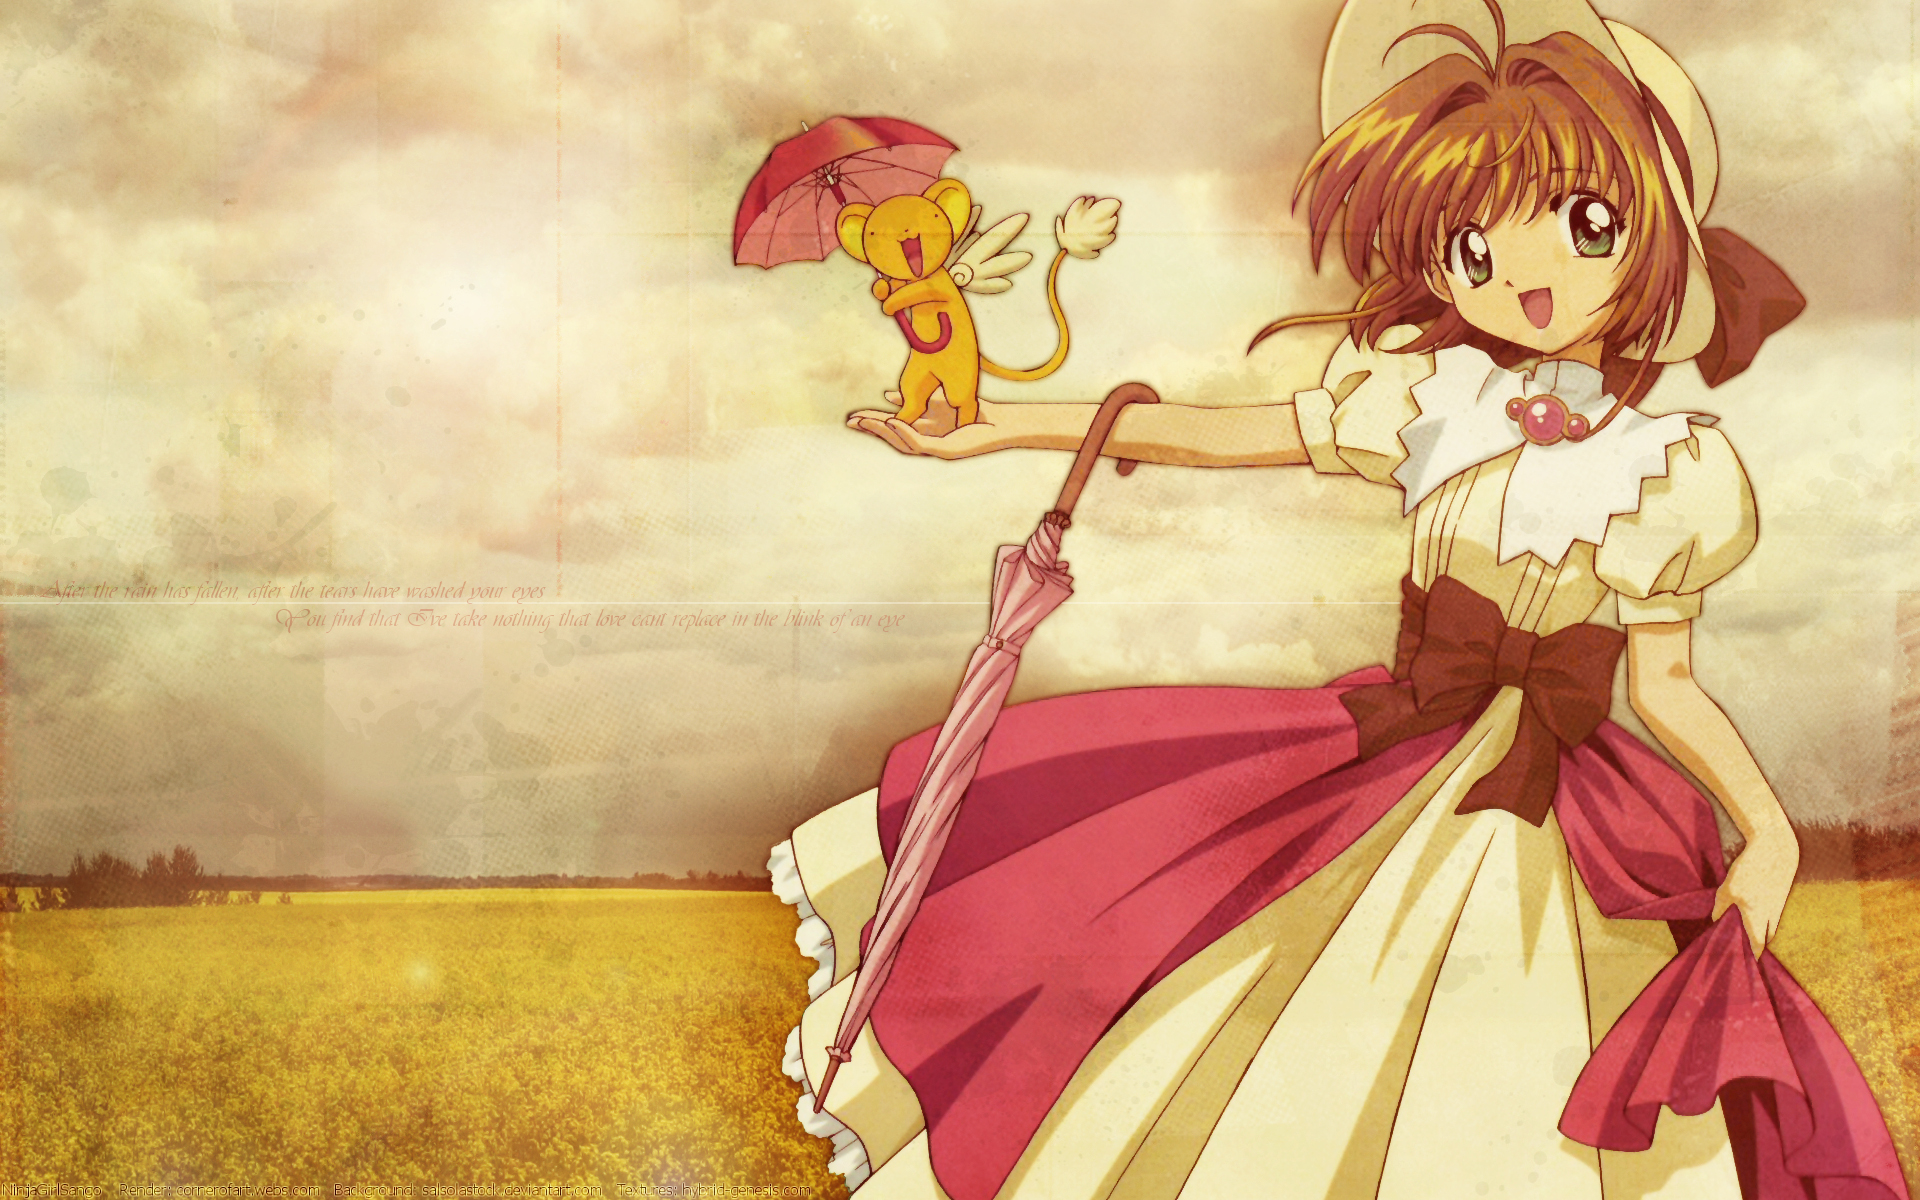 Anime character Sakura Kinomoto from Cardcaptor Sakura in a vibrant desktop wallpaper.